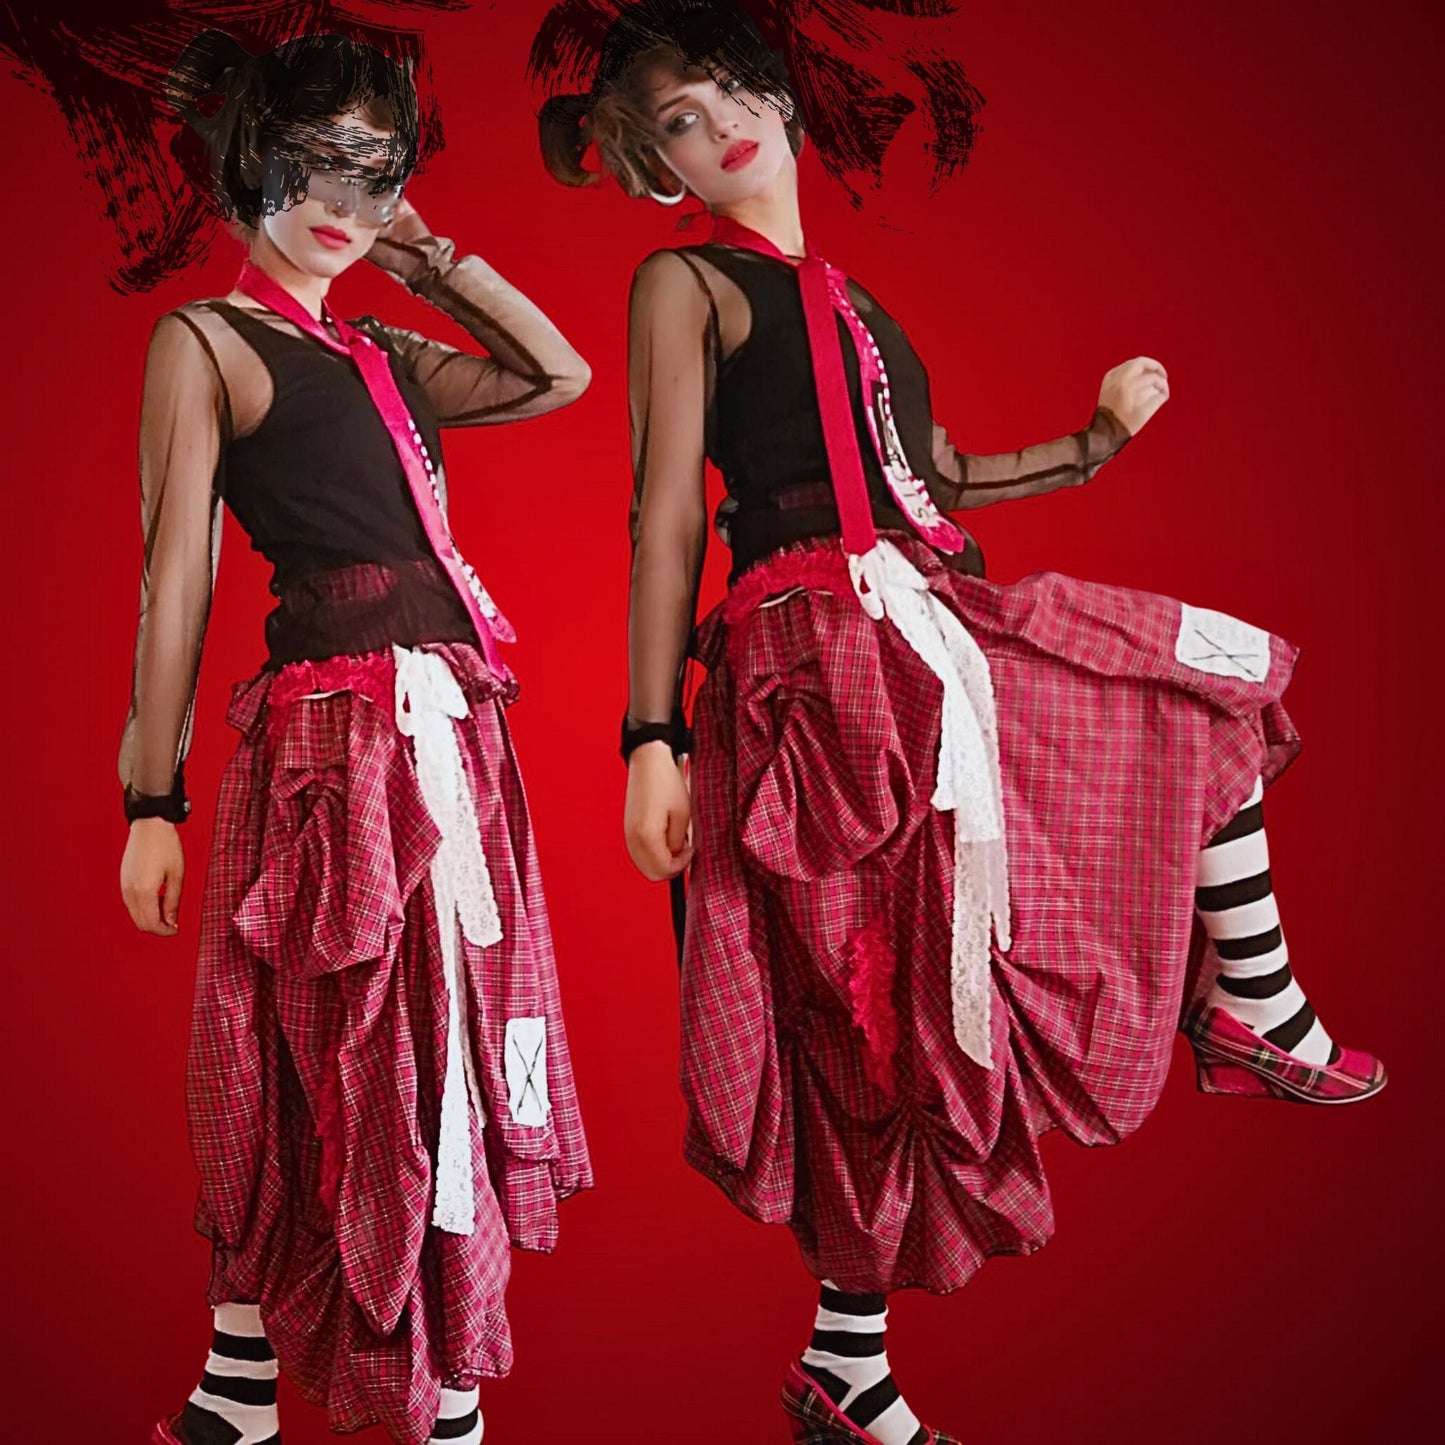 New Tokyo Punk Fashion ! Handmade Red Skirt